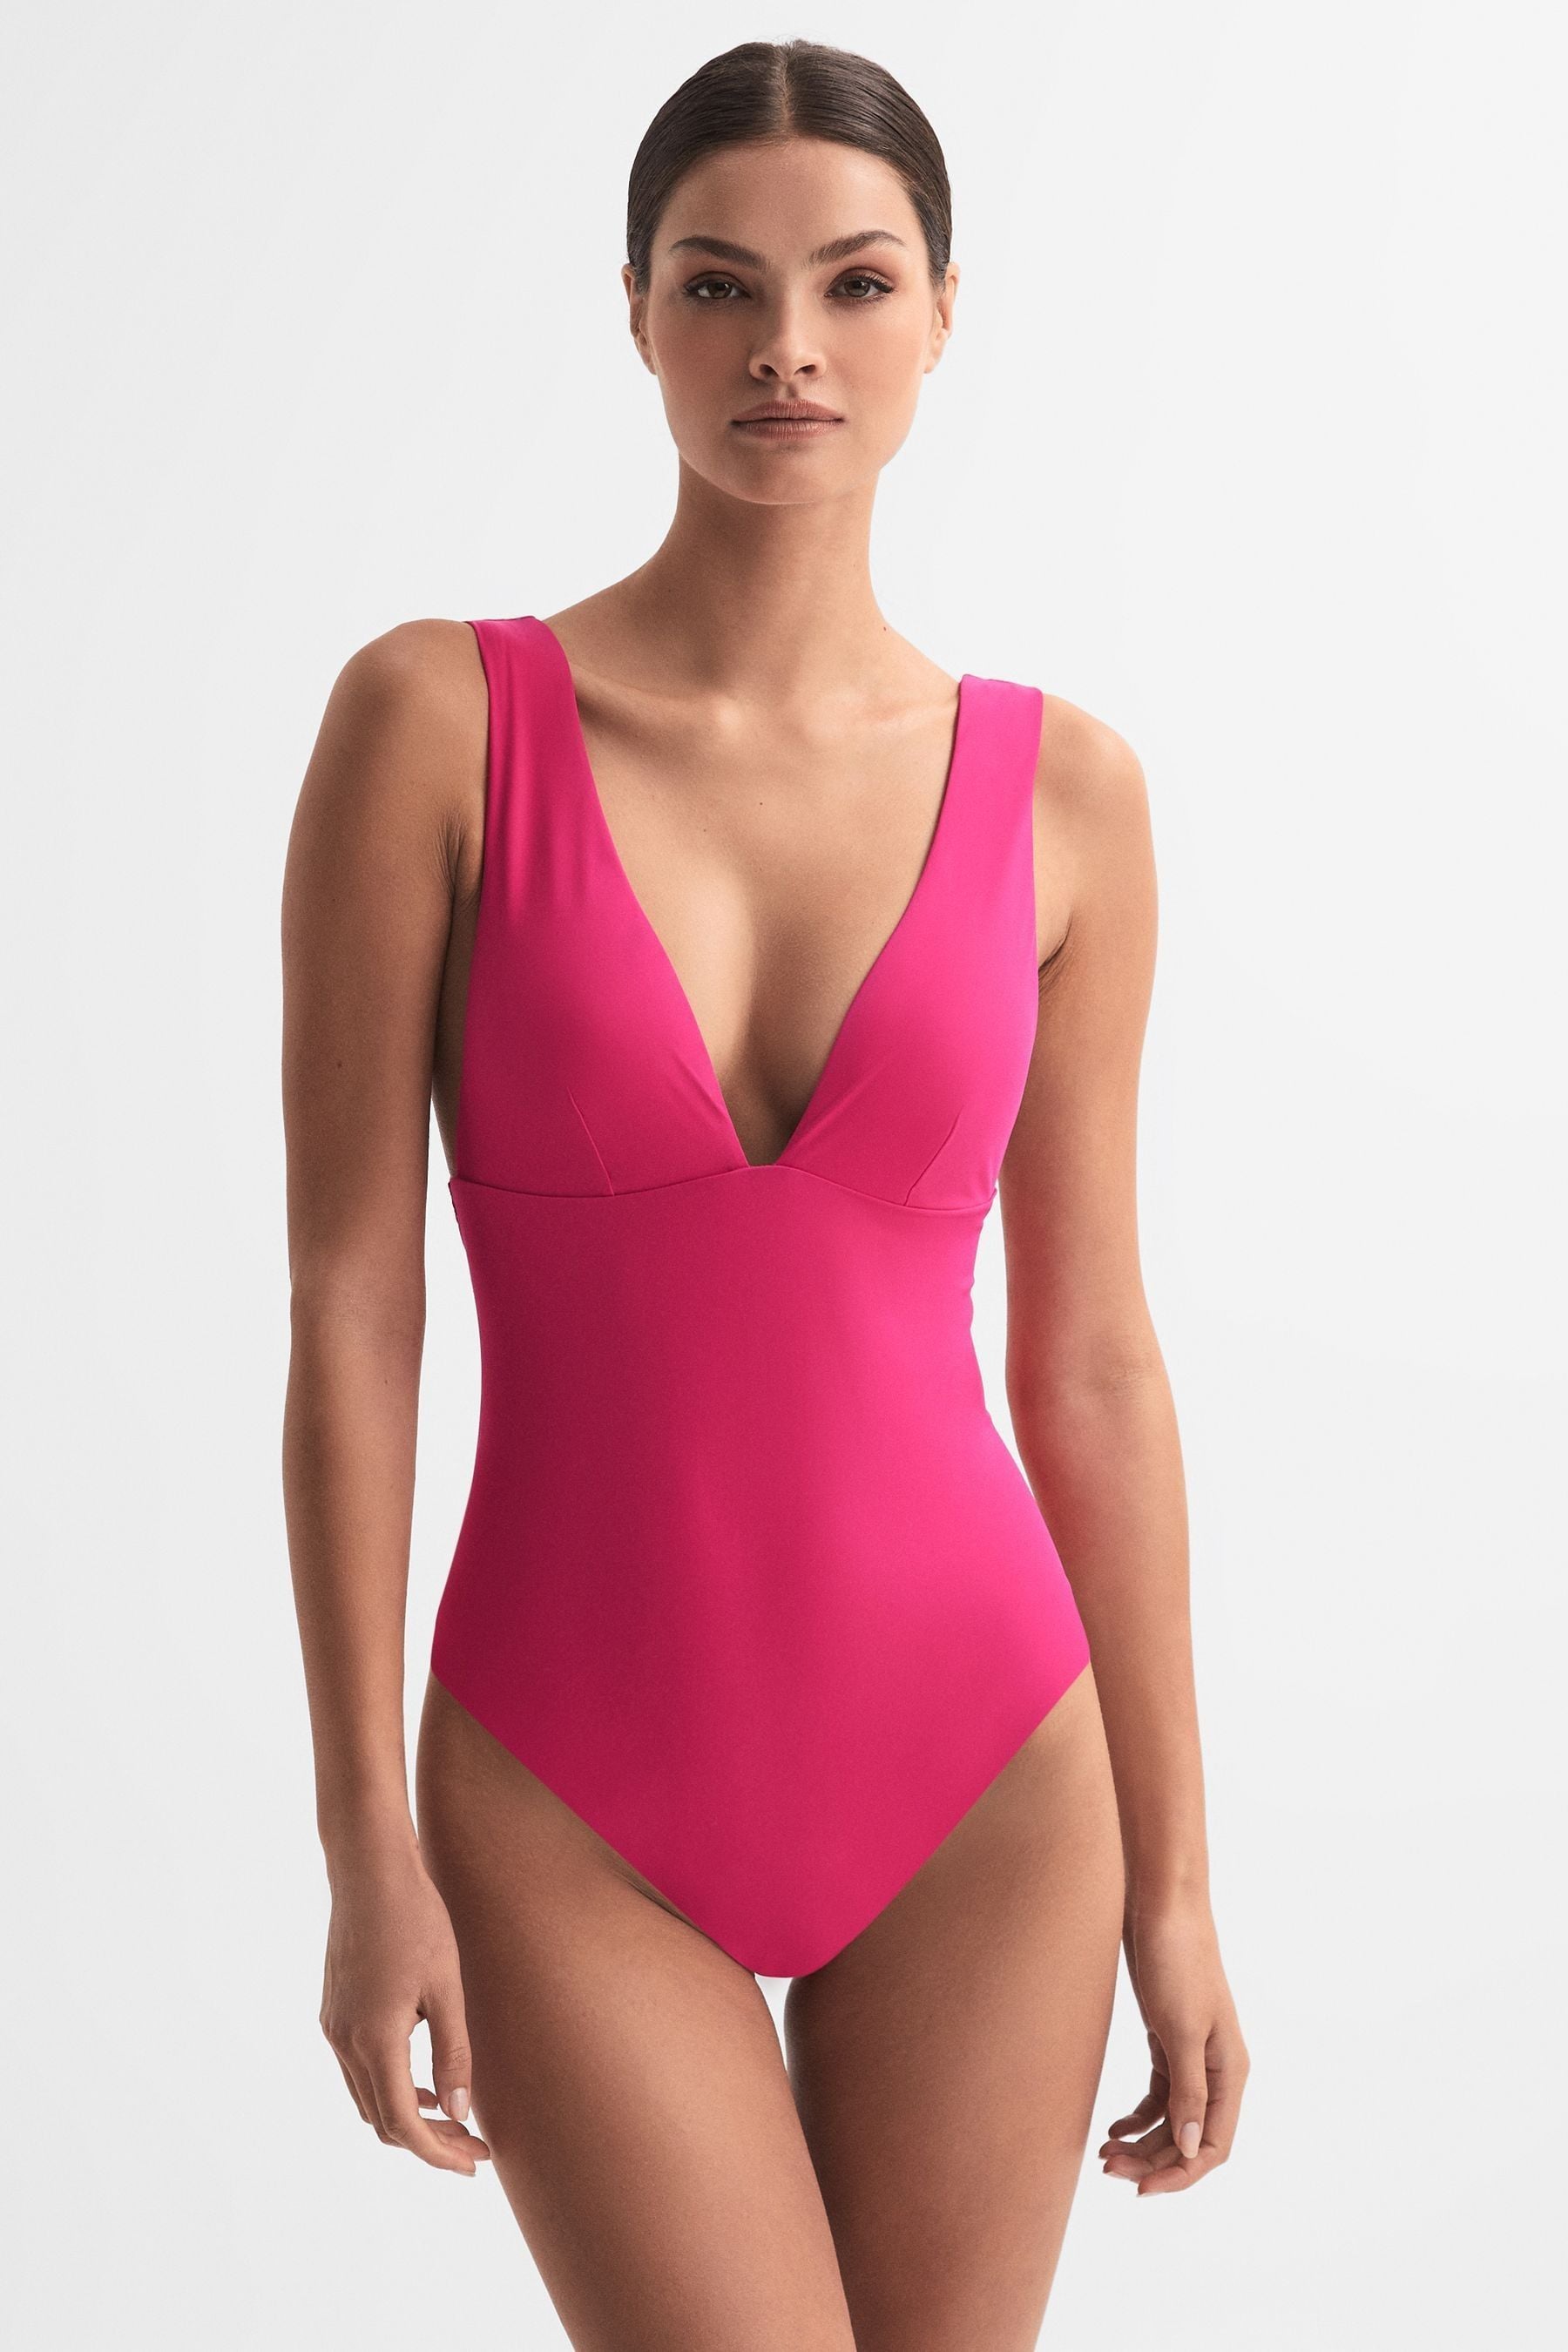 Reiss Luna - Pink Italian Fabric Swimsuit, Us 4